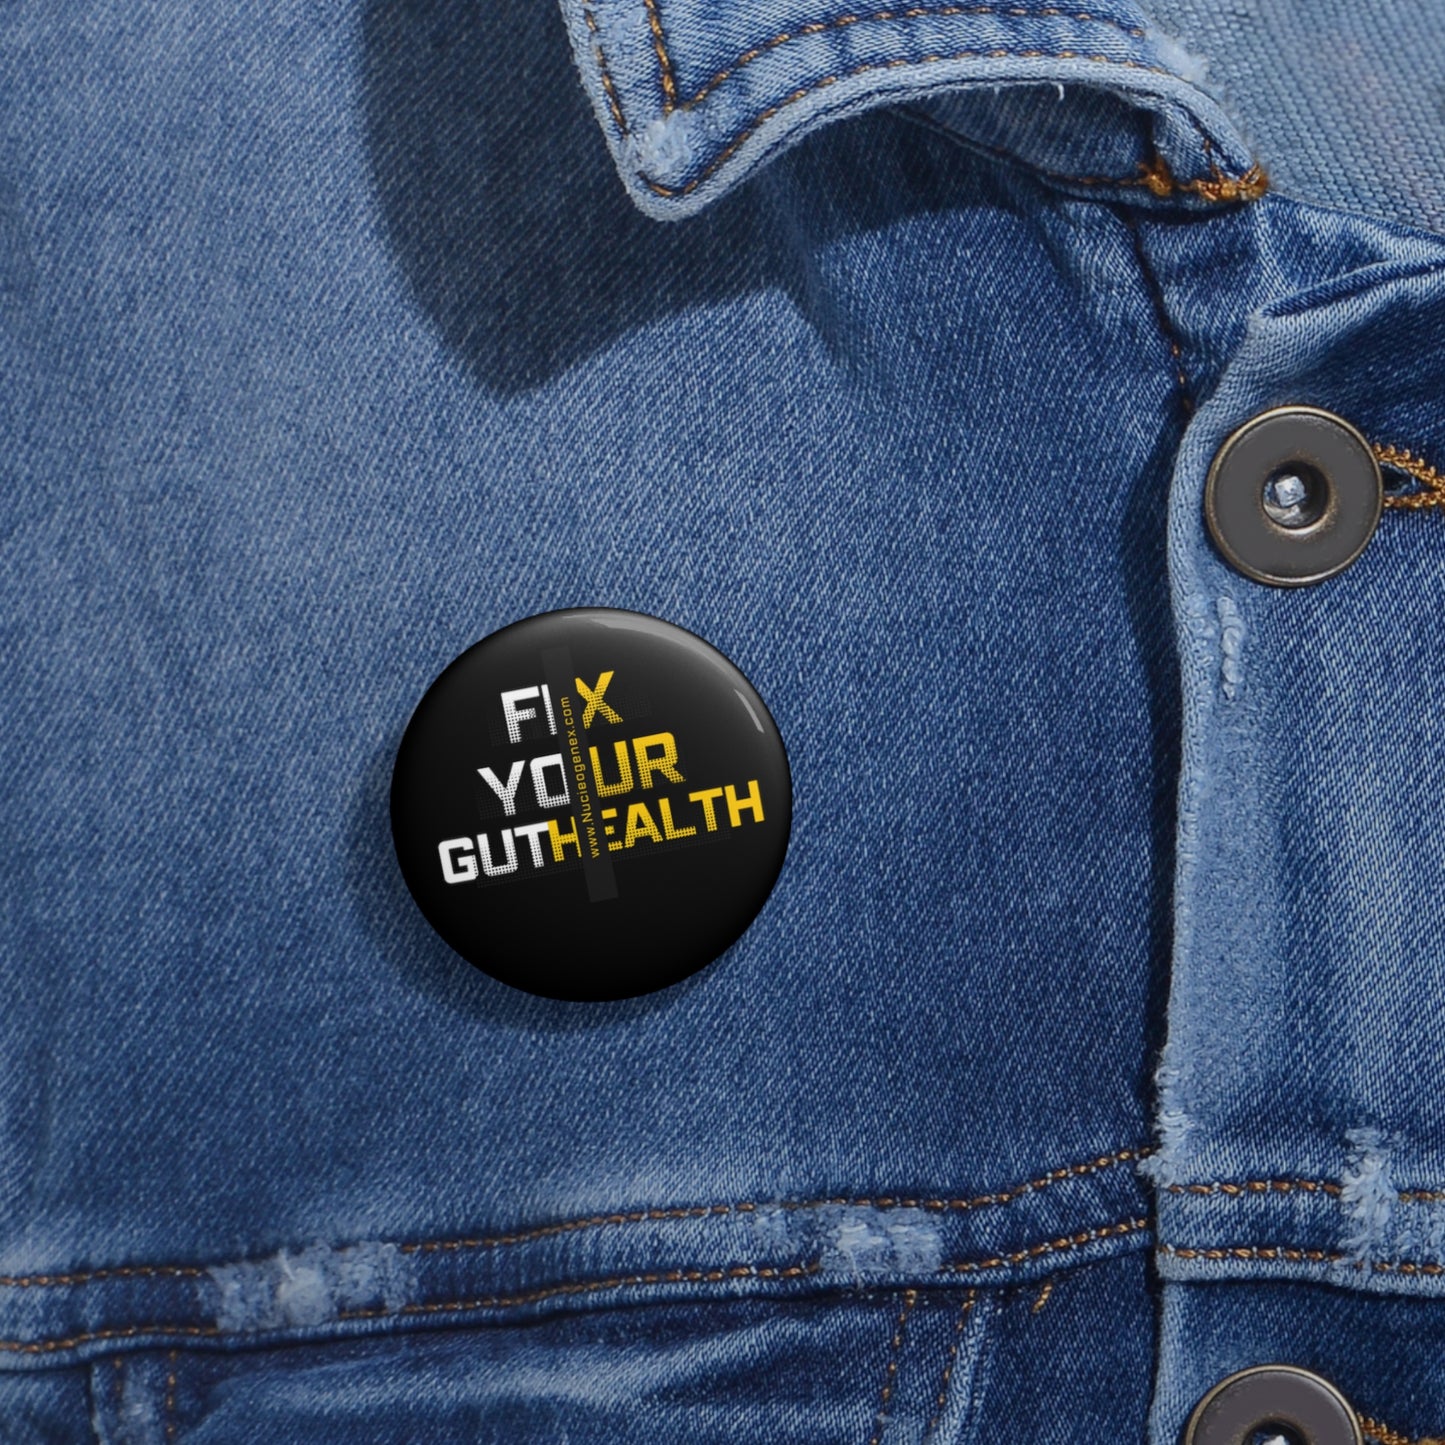 Custom Pin Buttons